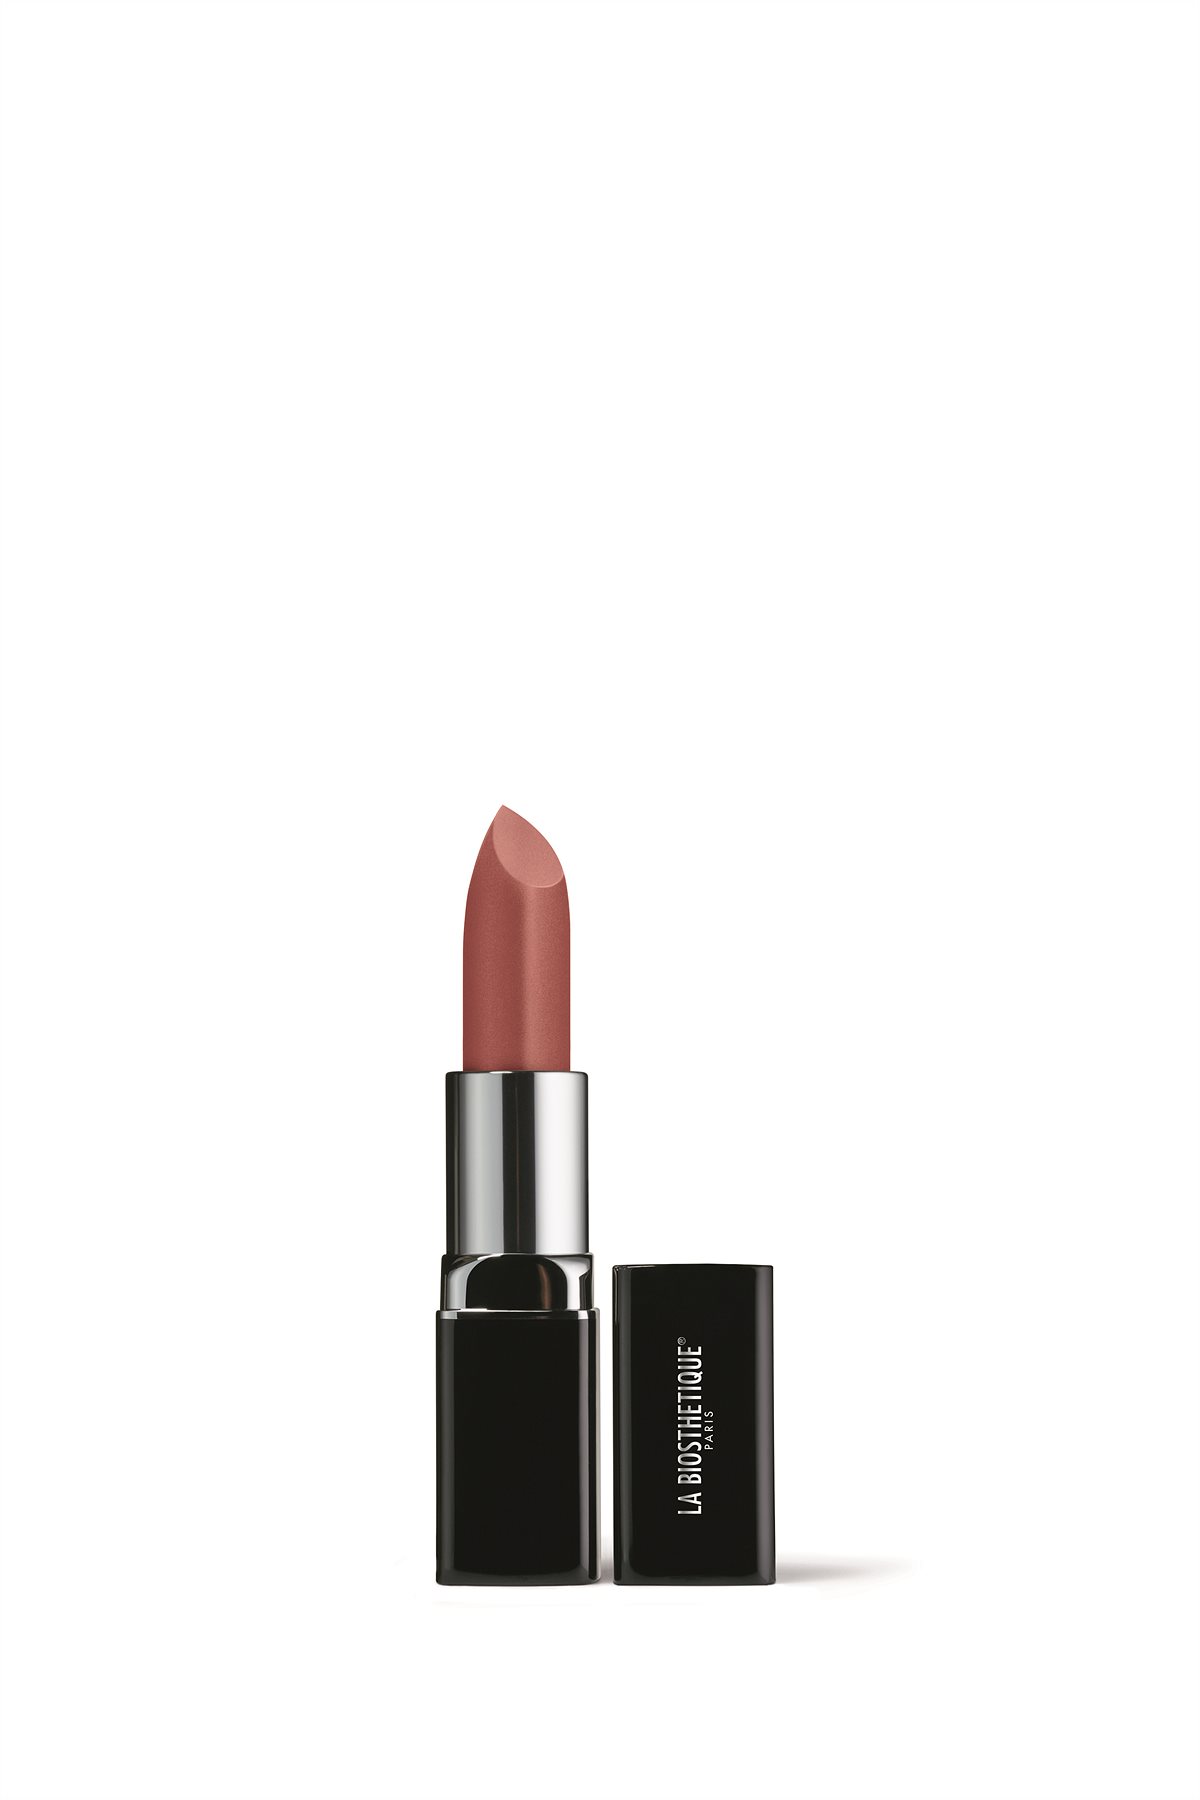 La Biosthétique_Sensual Lipstick Mellow Papaya_EUR 23